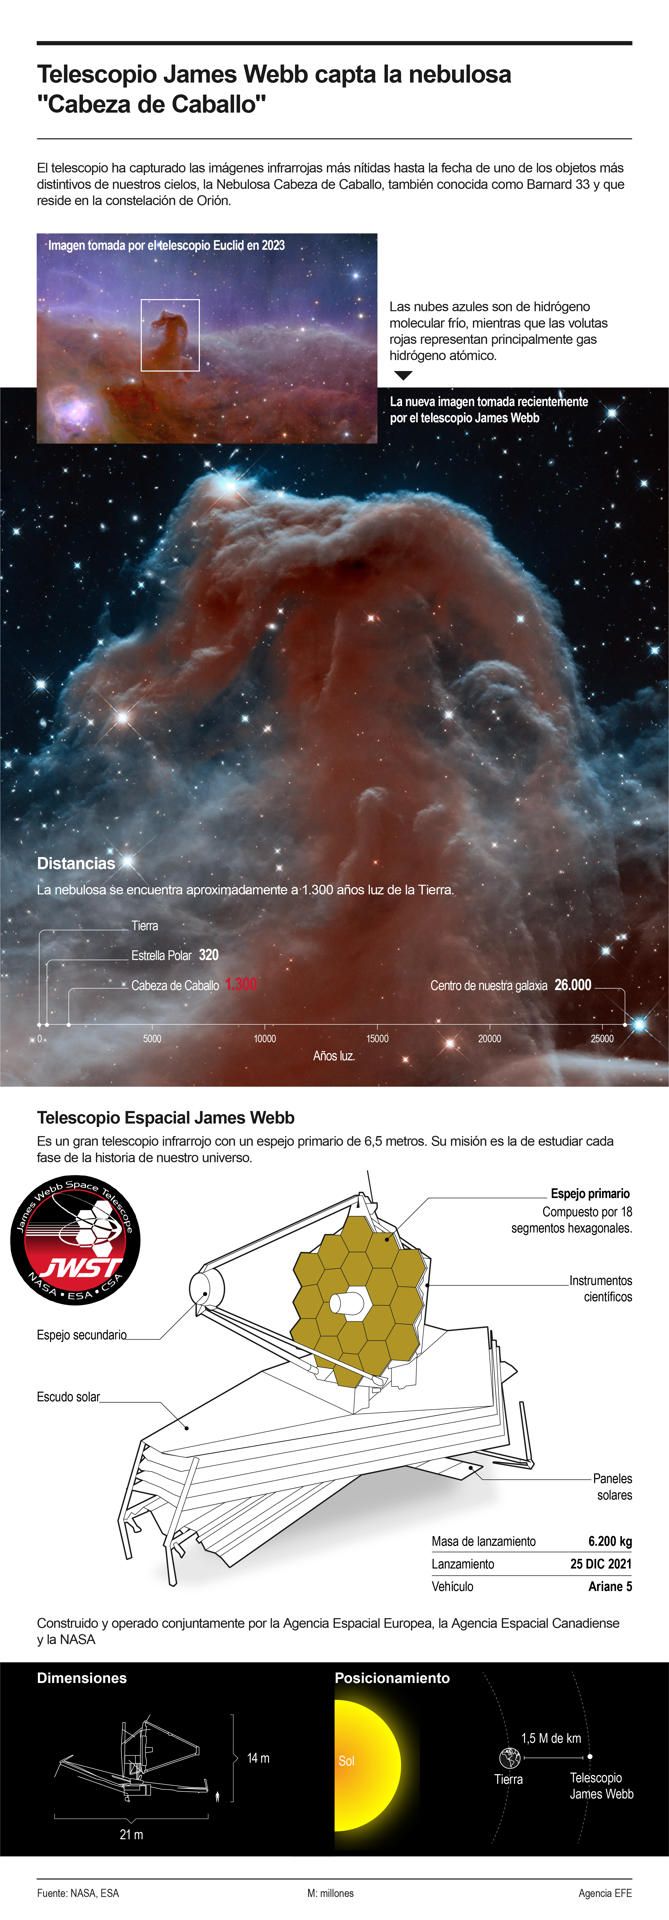 Telescopio James Webb capta la nebulosa "Cabeza de Caballo" 01 010524